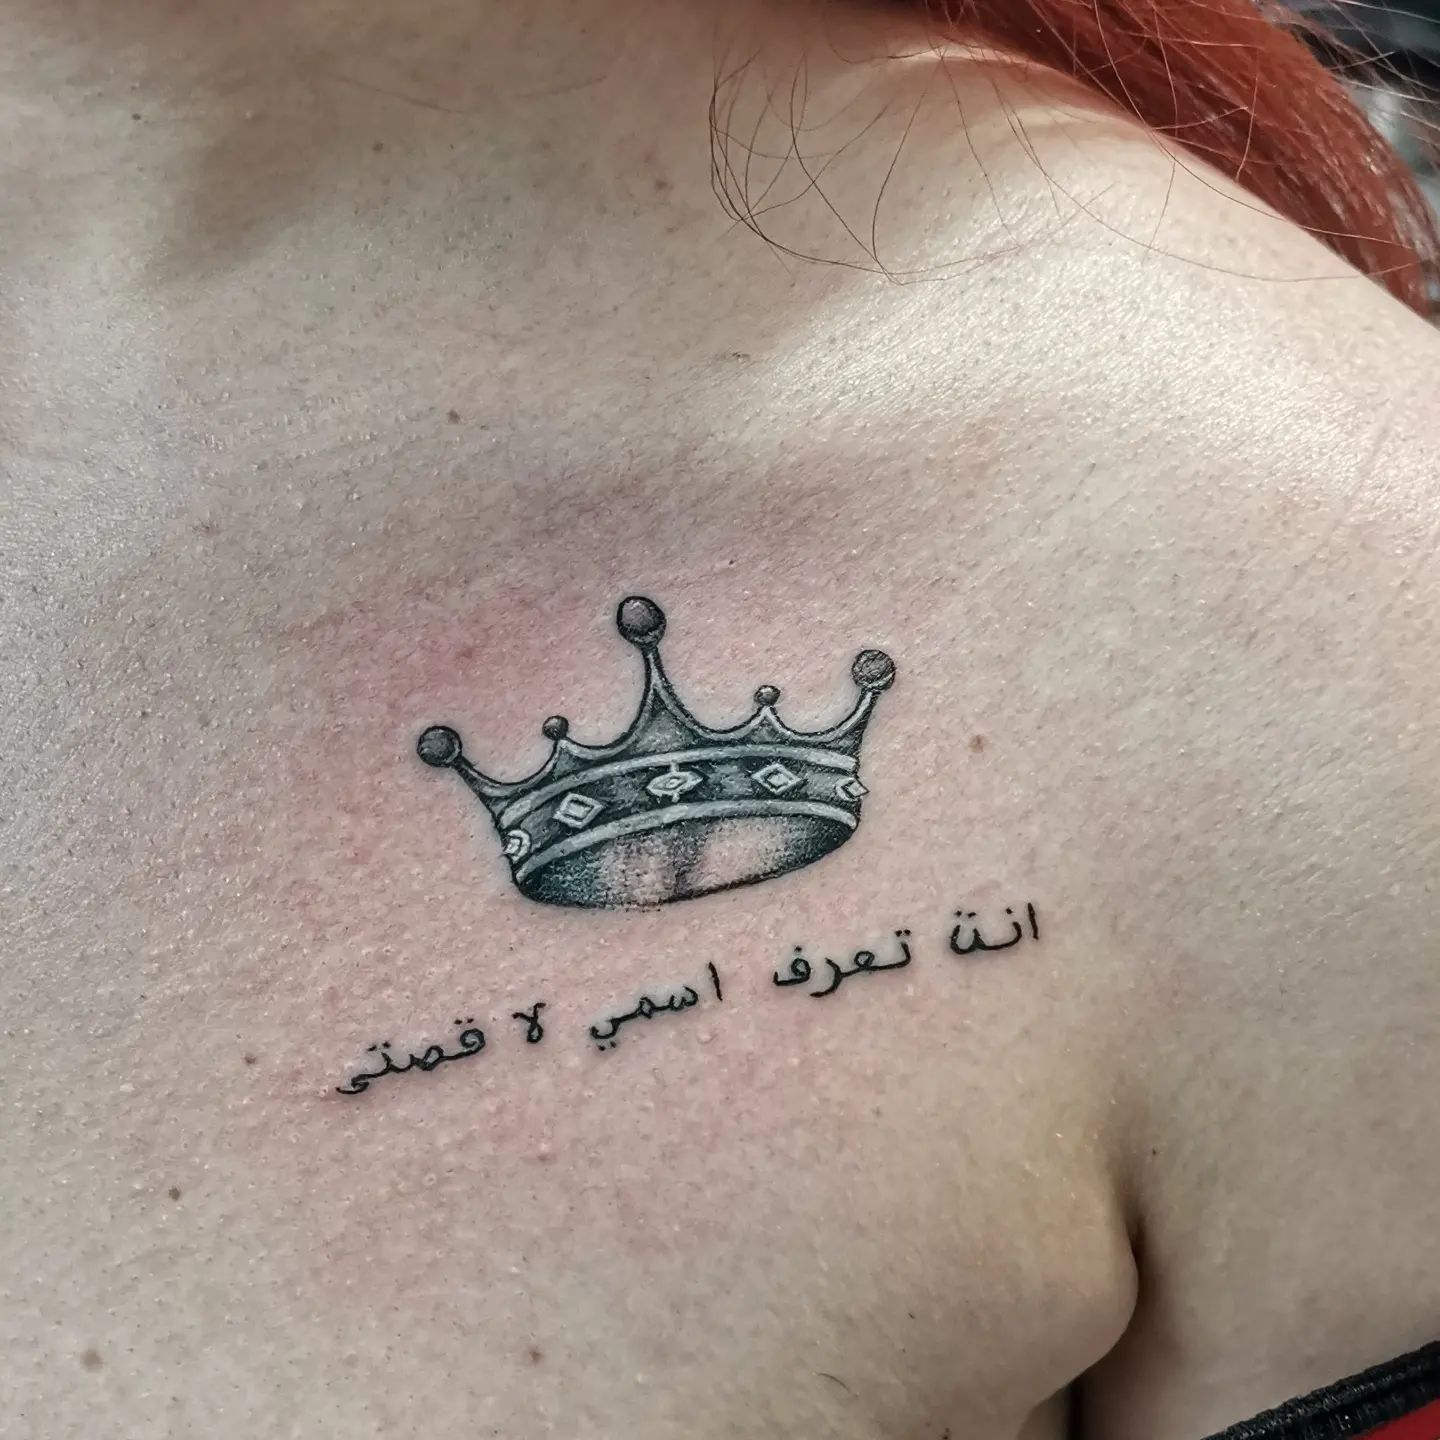 Reina tatuaje árabe